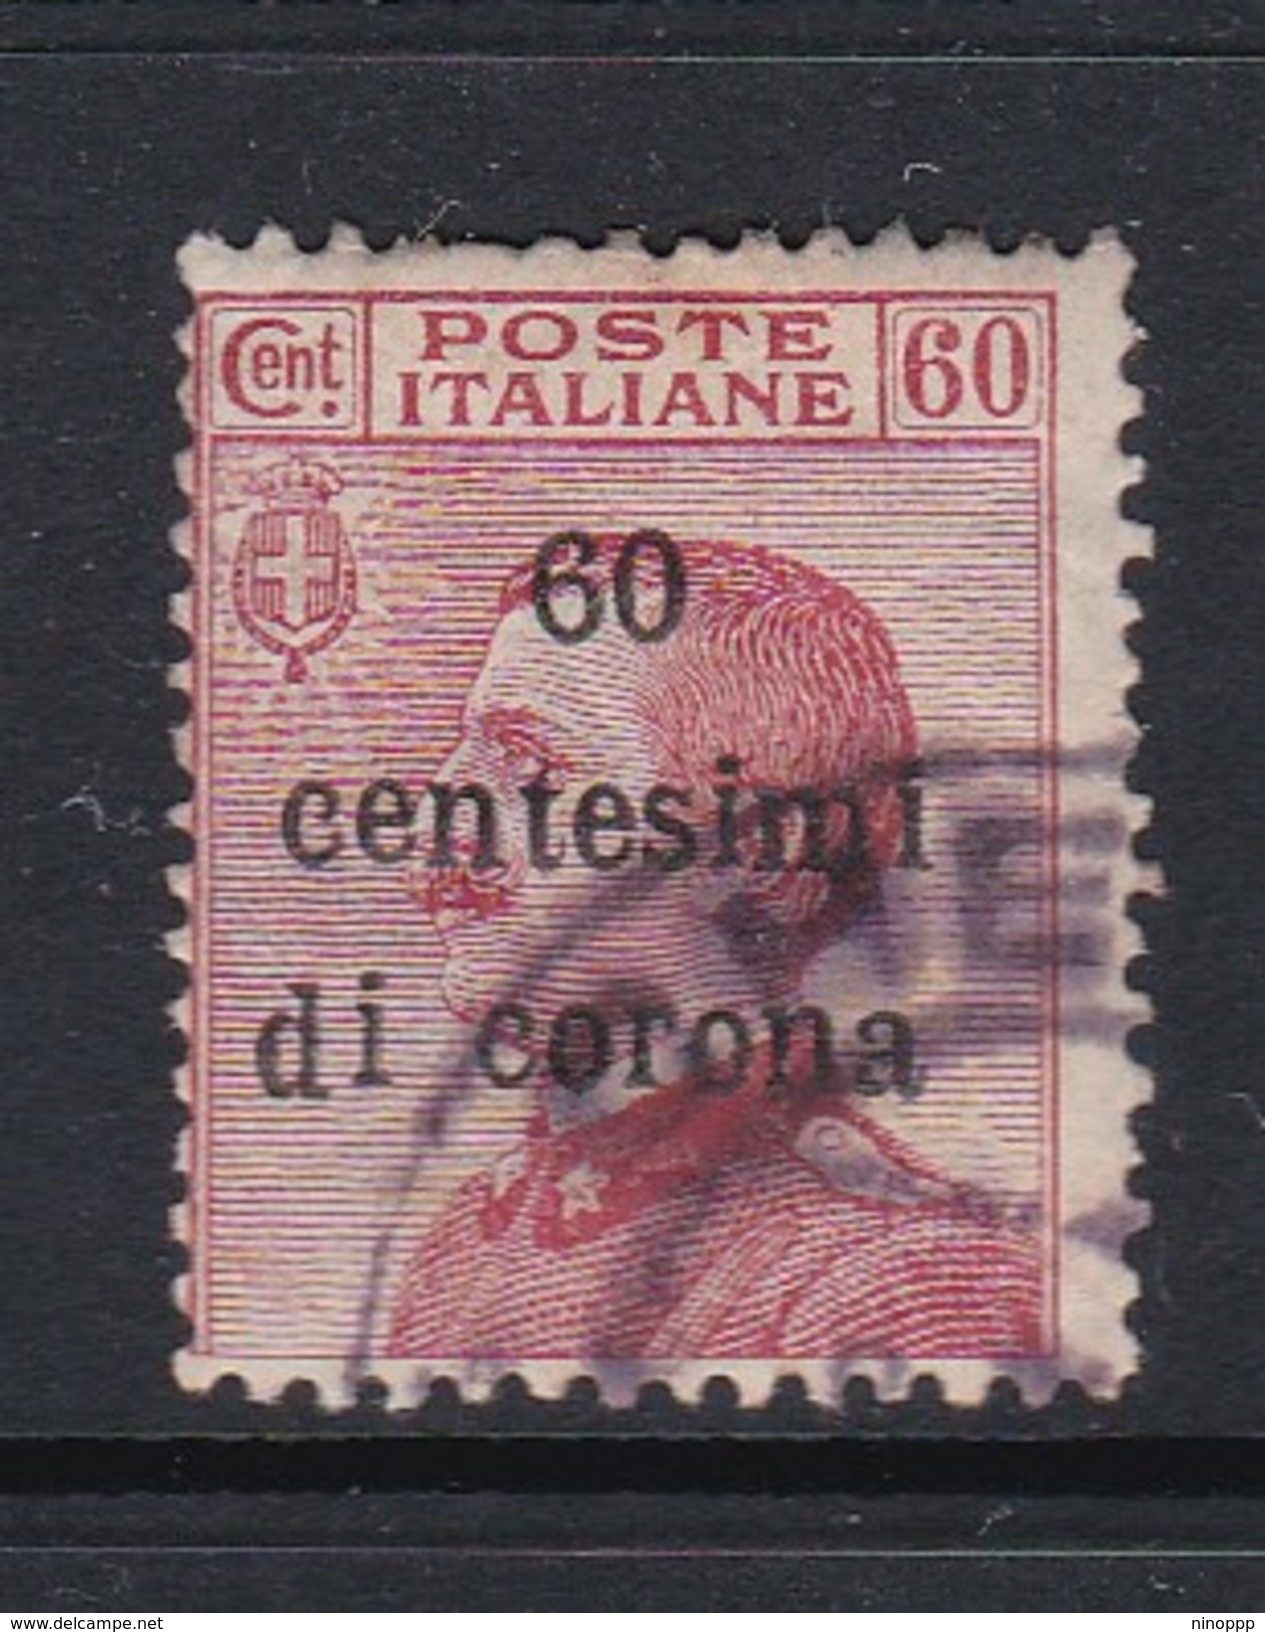 Venezia Giulia N73 1919 Italian Stamps Overprinted 60c On 60c Brown Carmine Used - Austrian Occupation